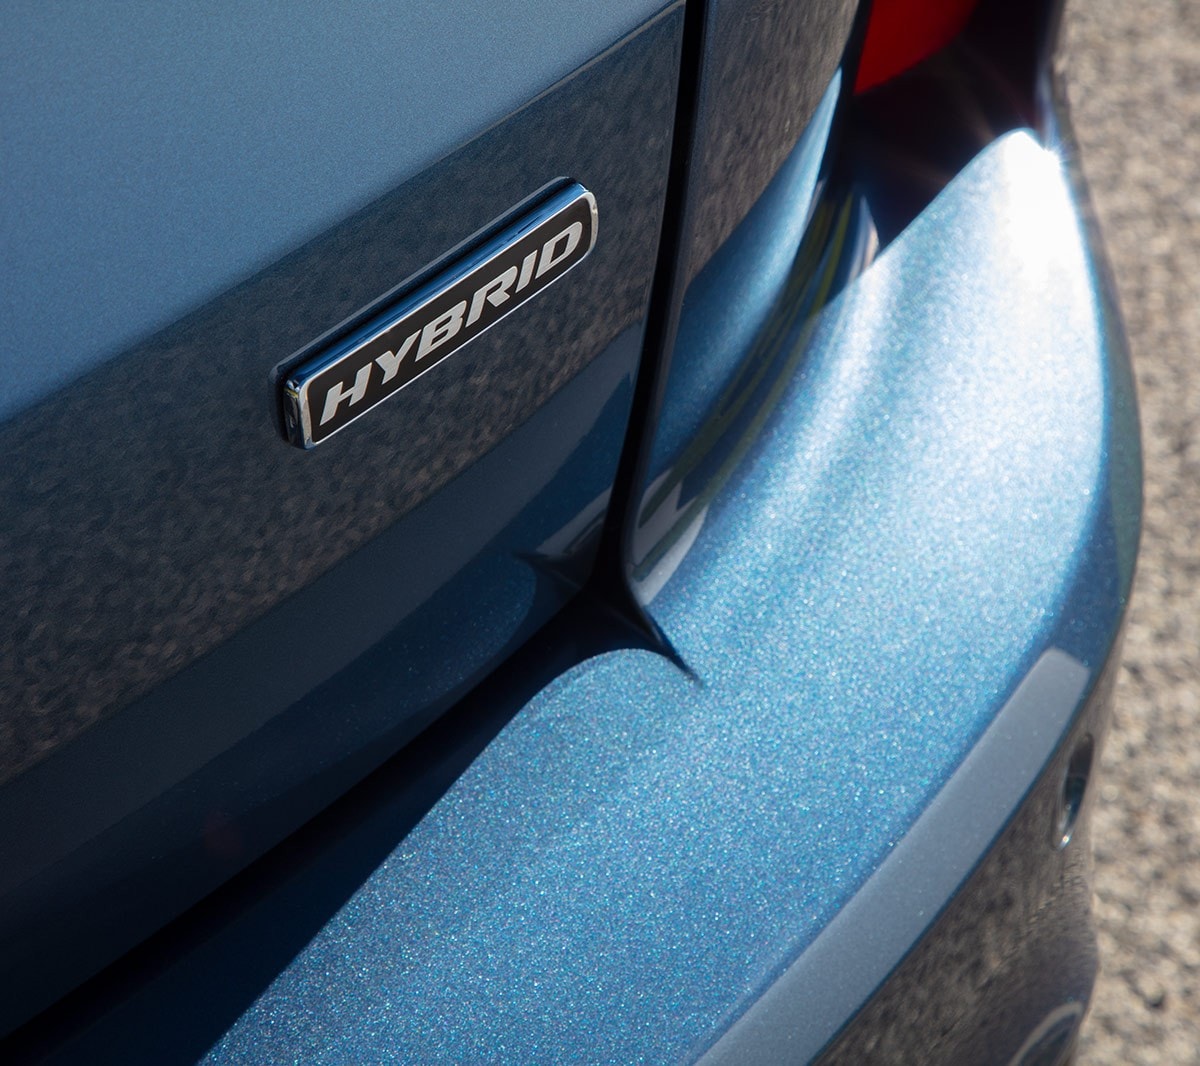 Ford Kuga in Blau. Detailansicht, Hybrid Logo